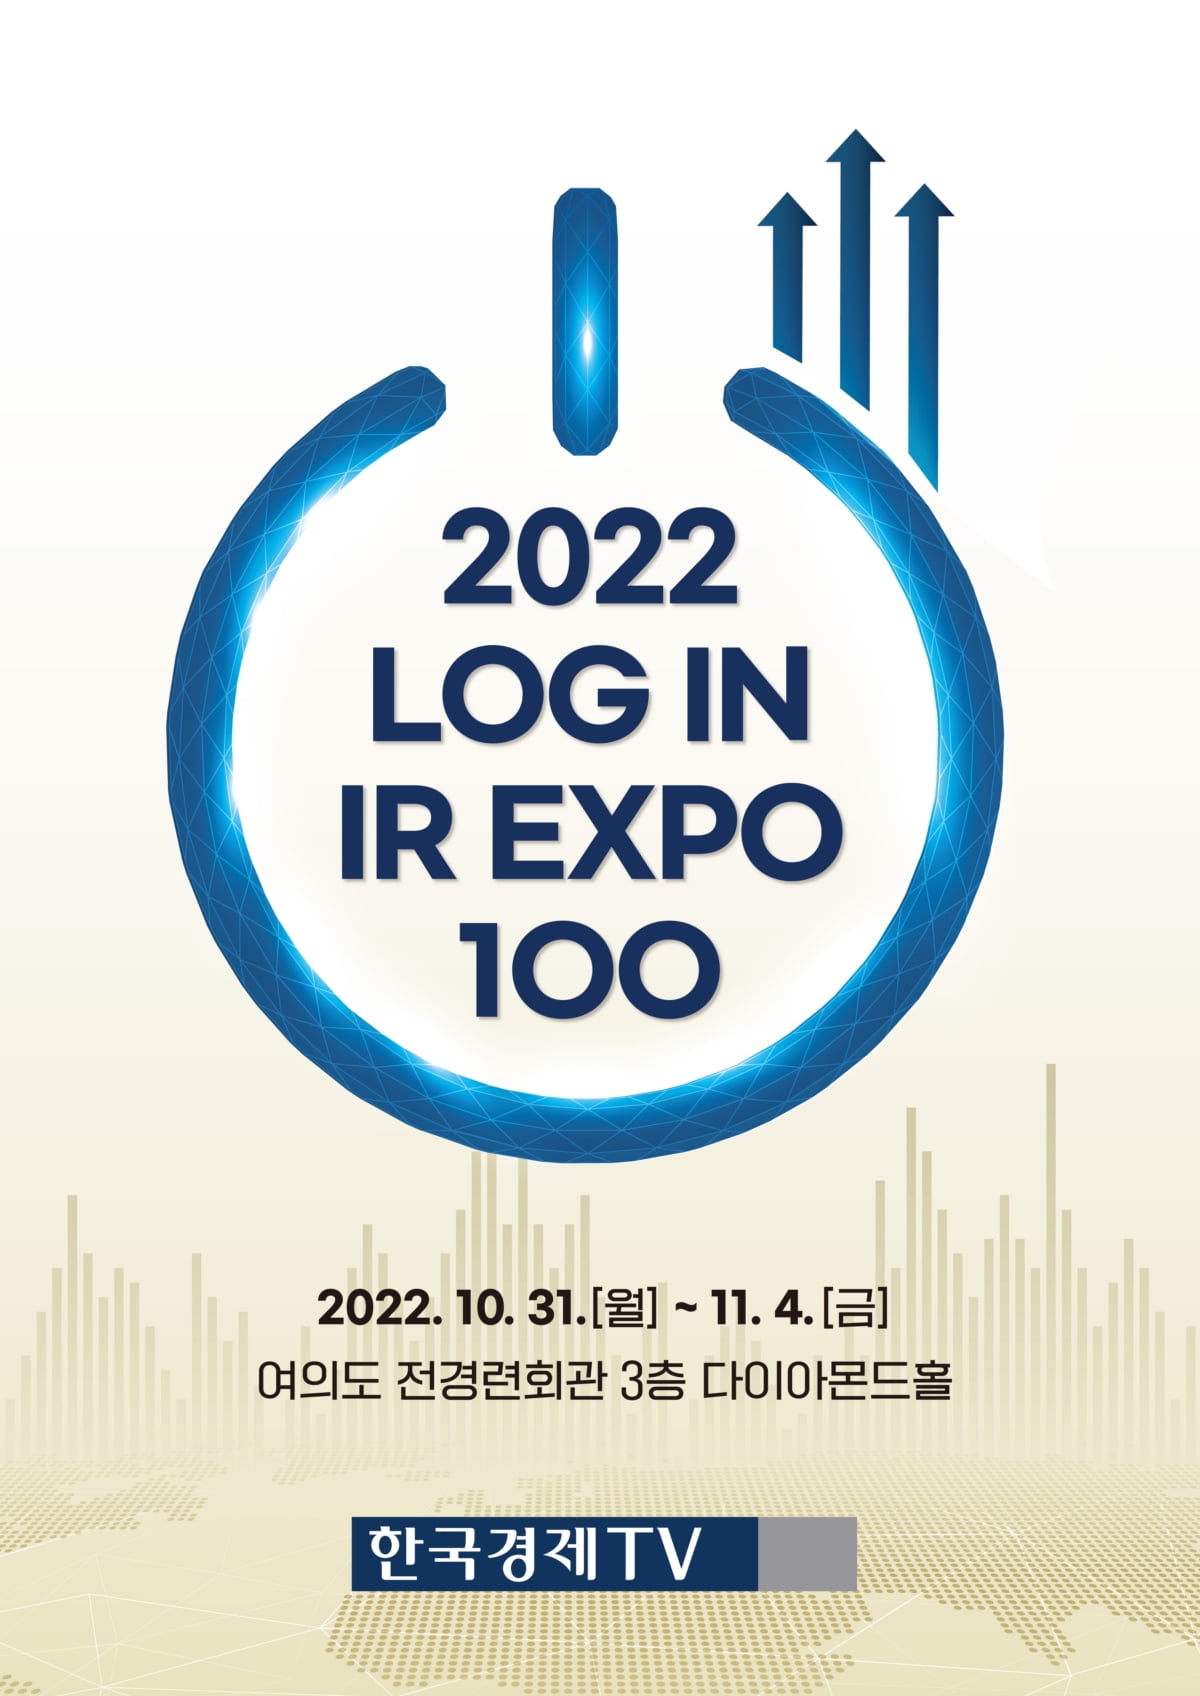 '2022 LOG IN IR EXPO 100' 31일 개막